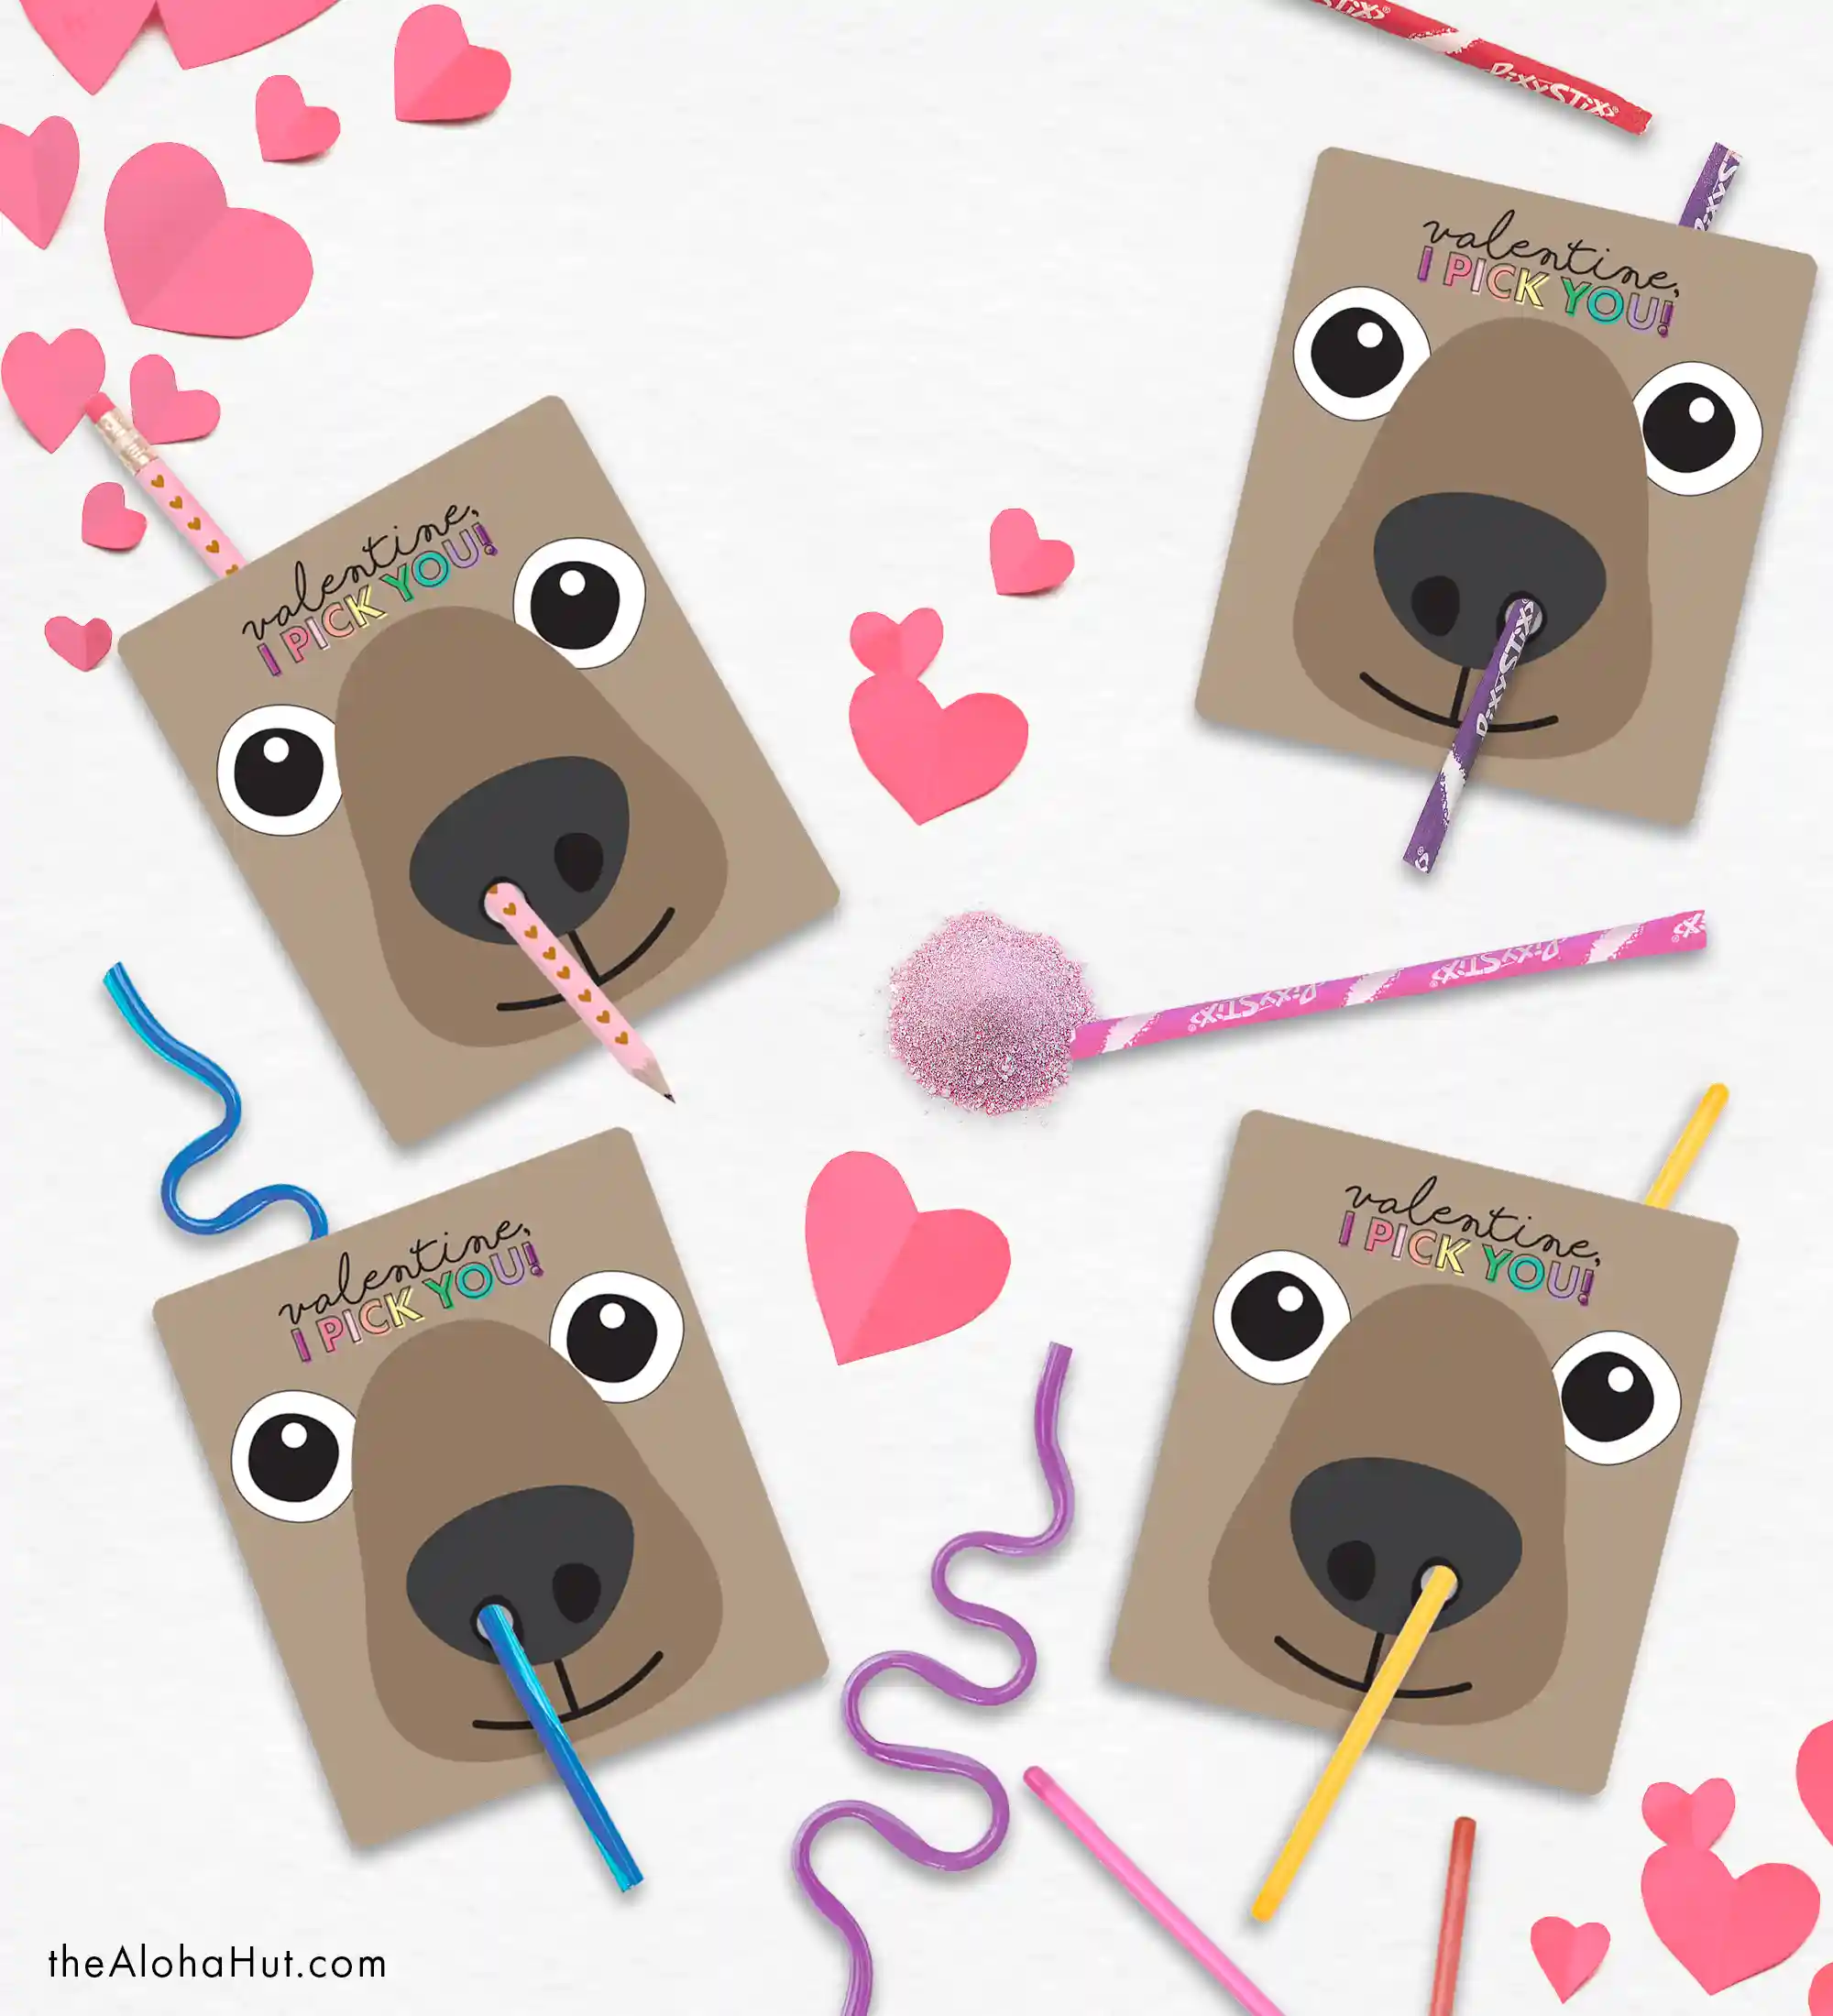 Fun & Easy Kids Valentine's Day Card Ideas - Valentine, I Pick You